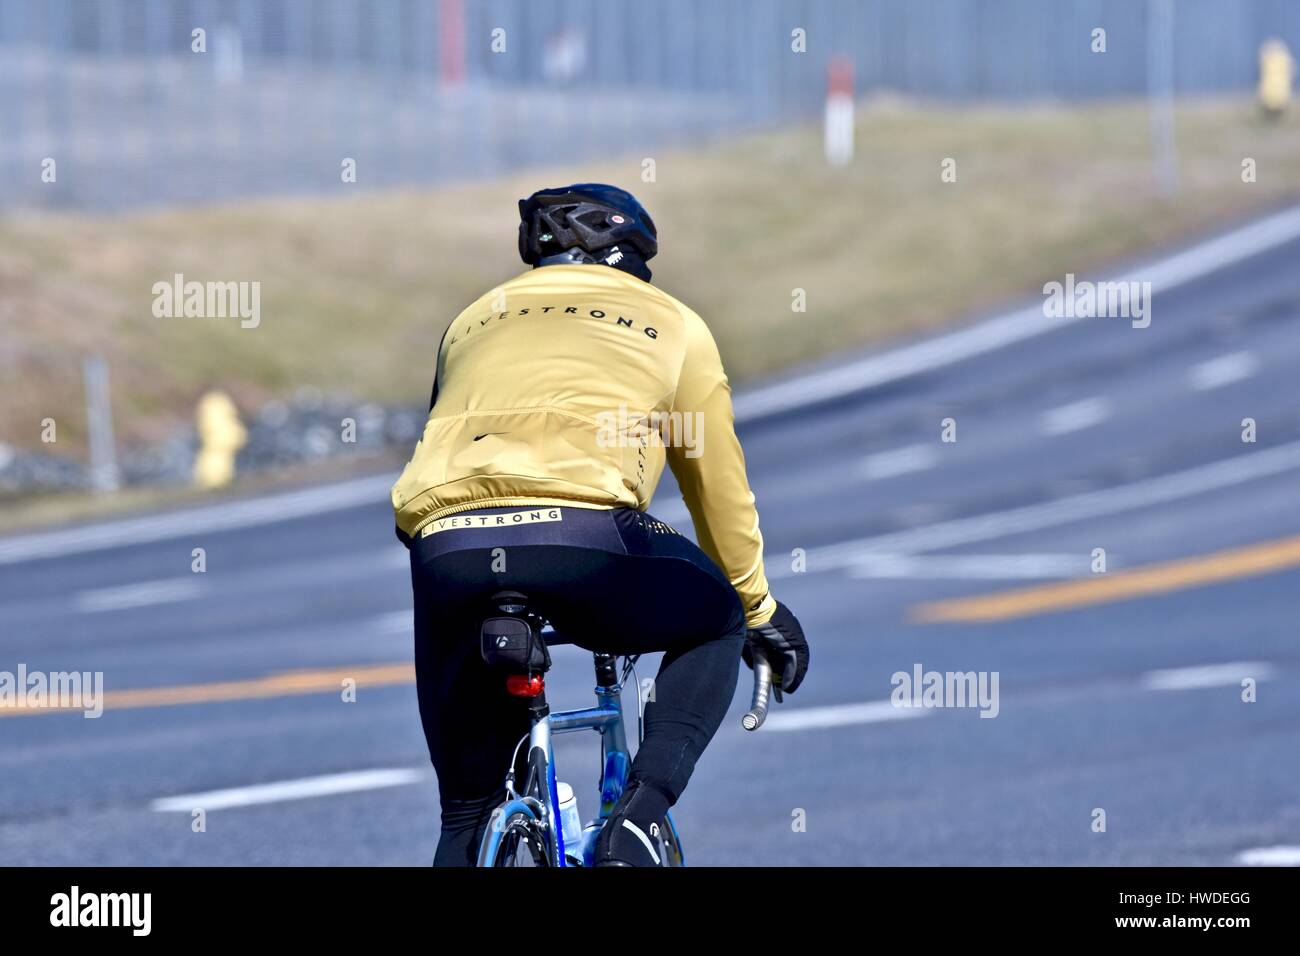 Un ciclista en el Livestrong ropa Foto de stock